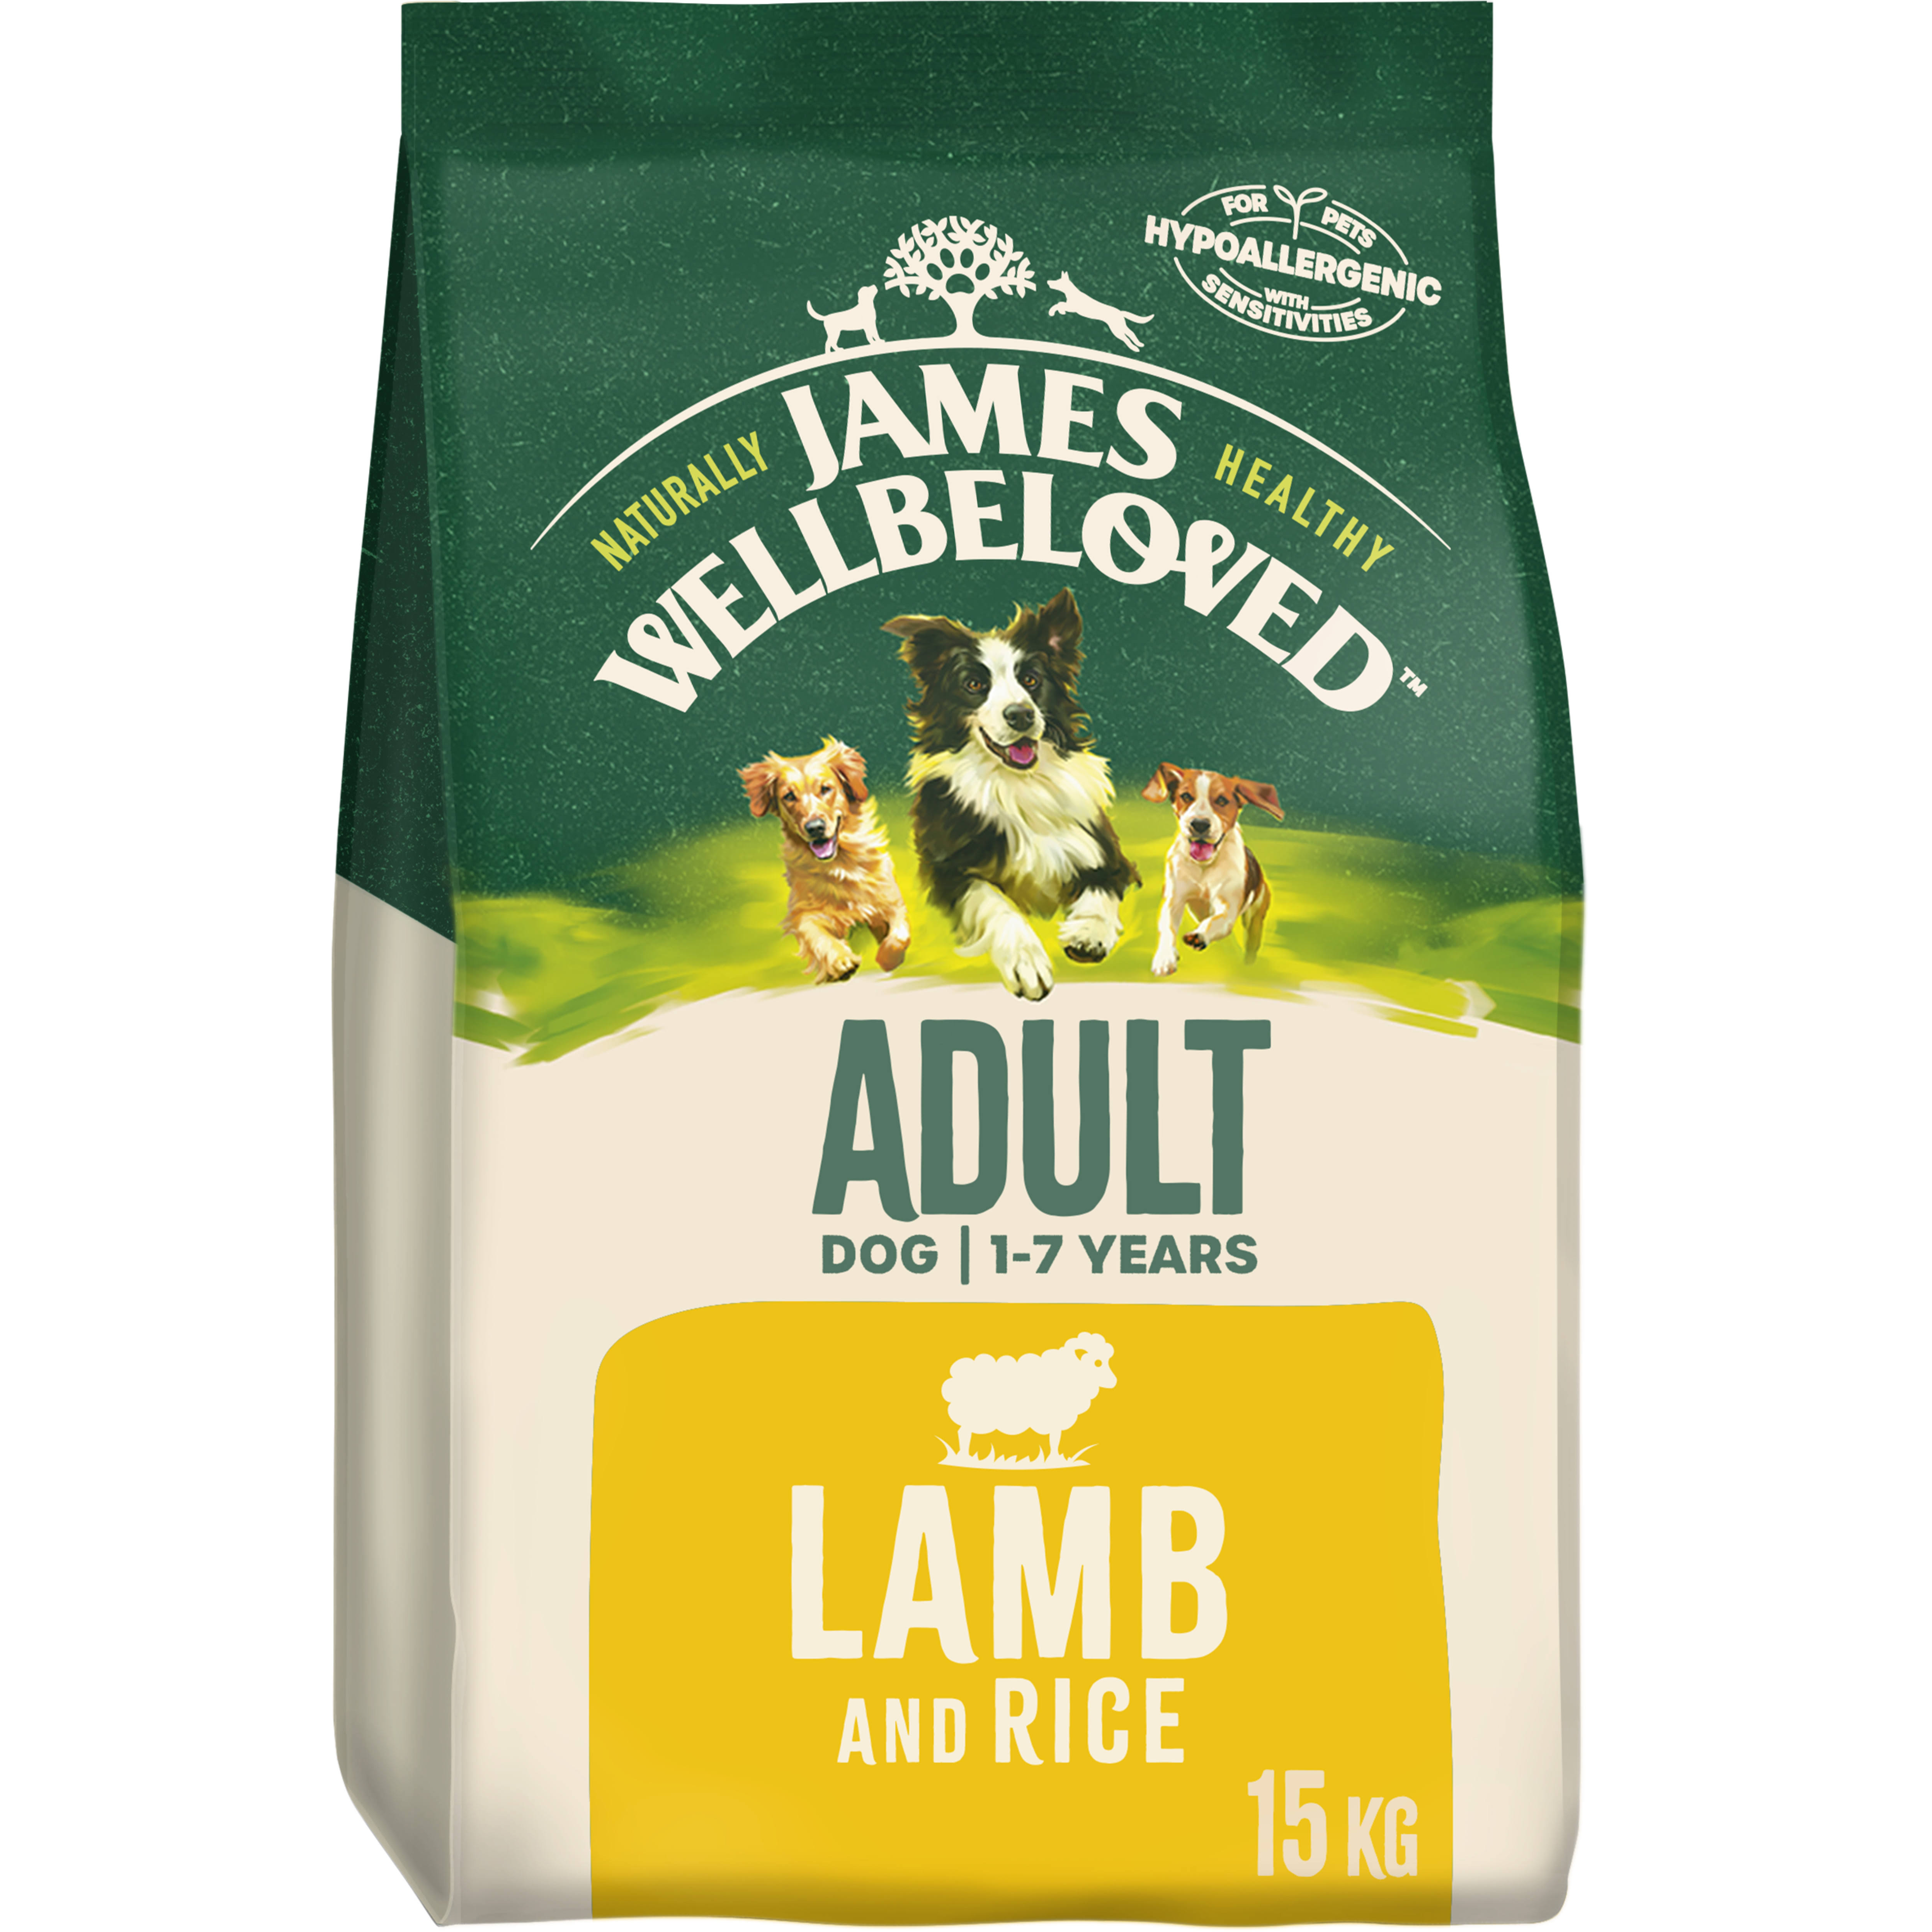 James Wellbeloved Dog Food - Lamb and Rice, Adult, 15kg